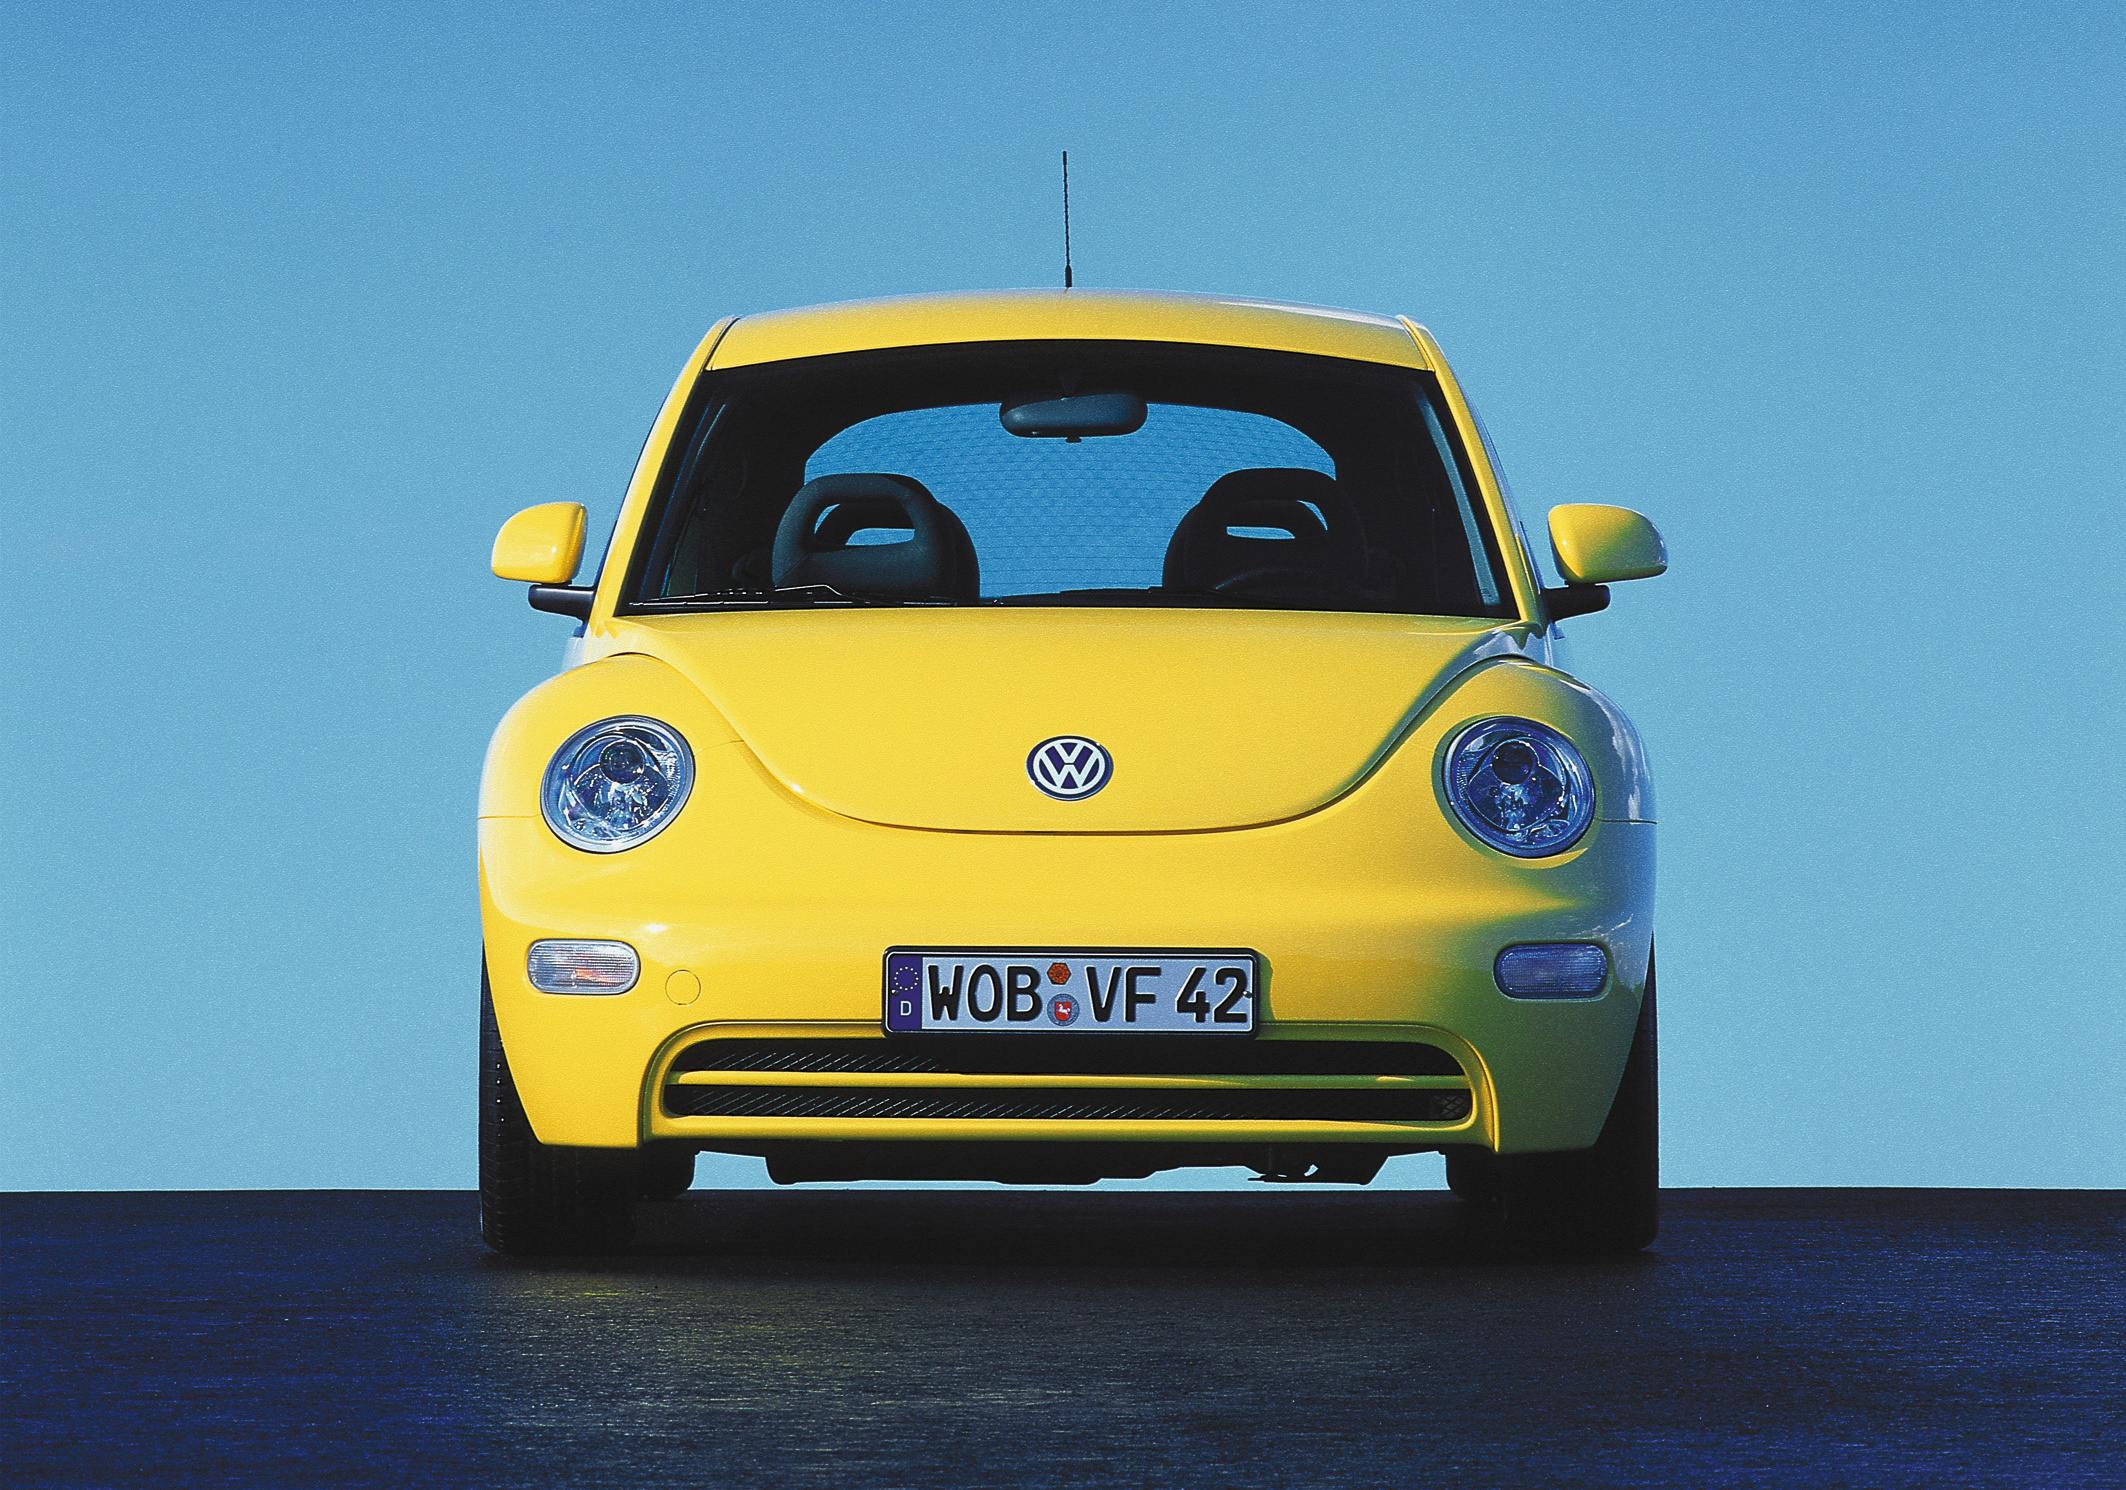 VW Beetle 1998 front